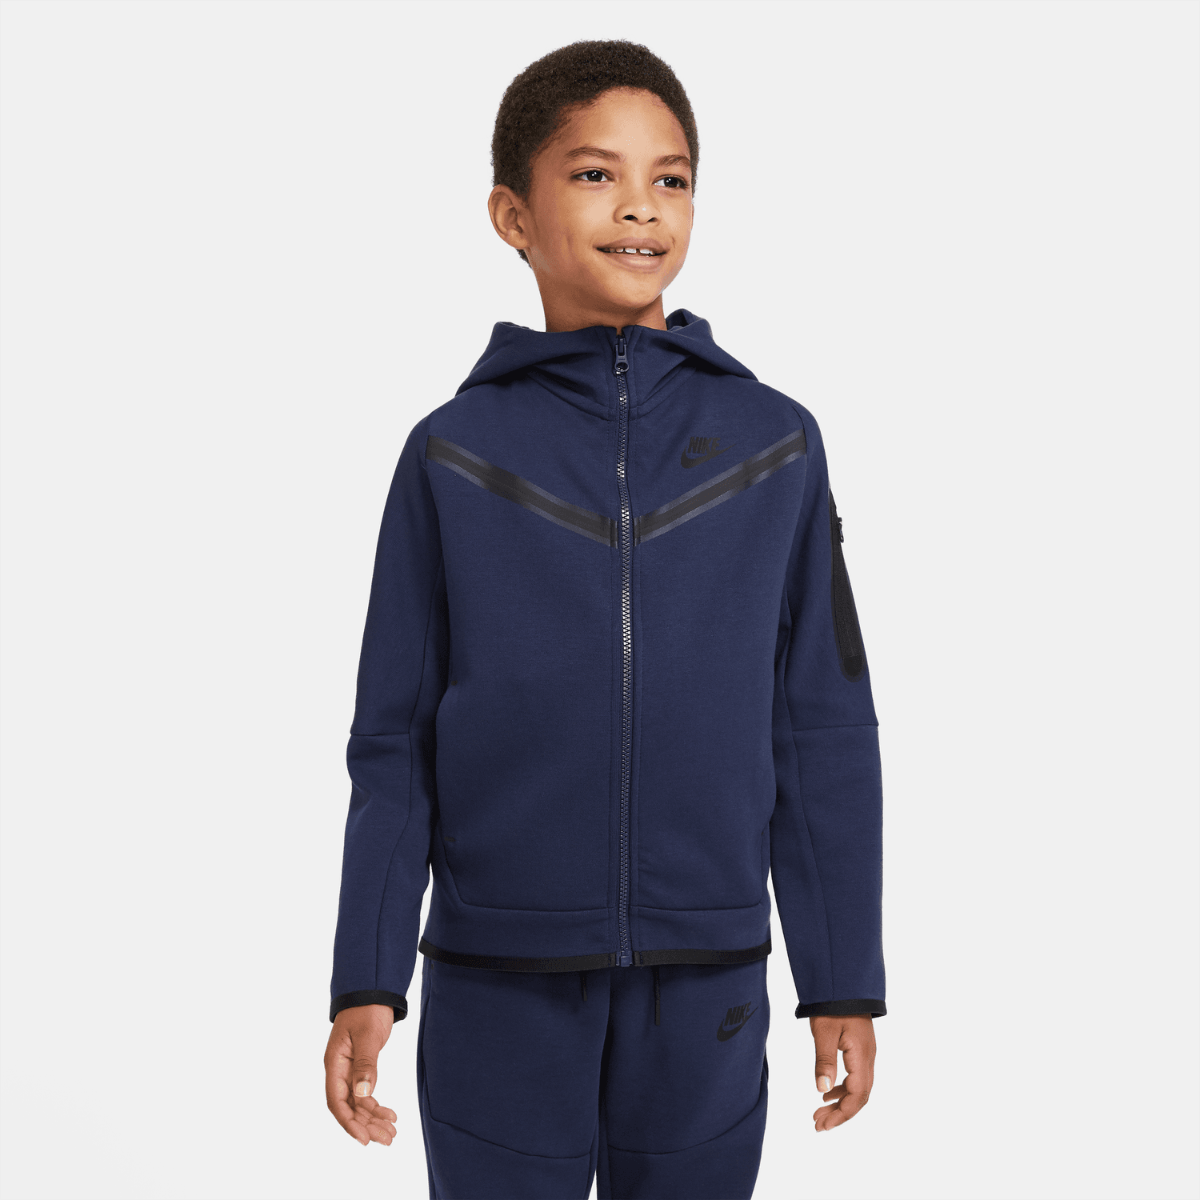 Nike Tech Fleece Junior Jacke – Blau/Schwarz